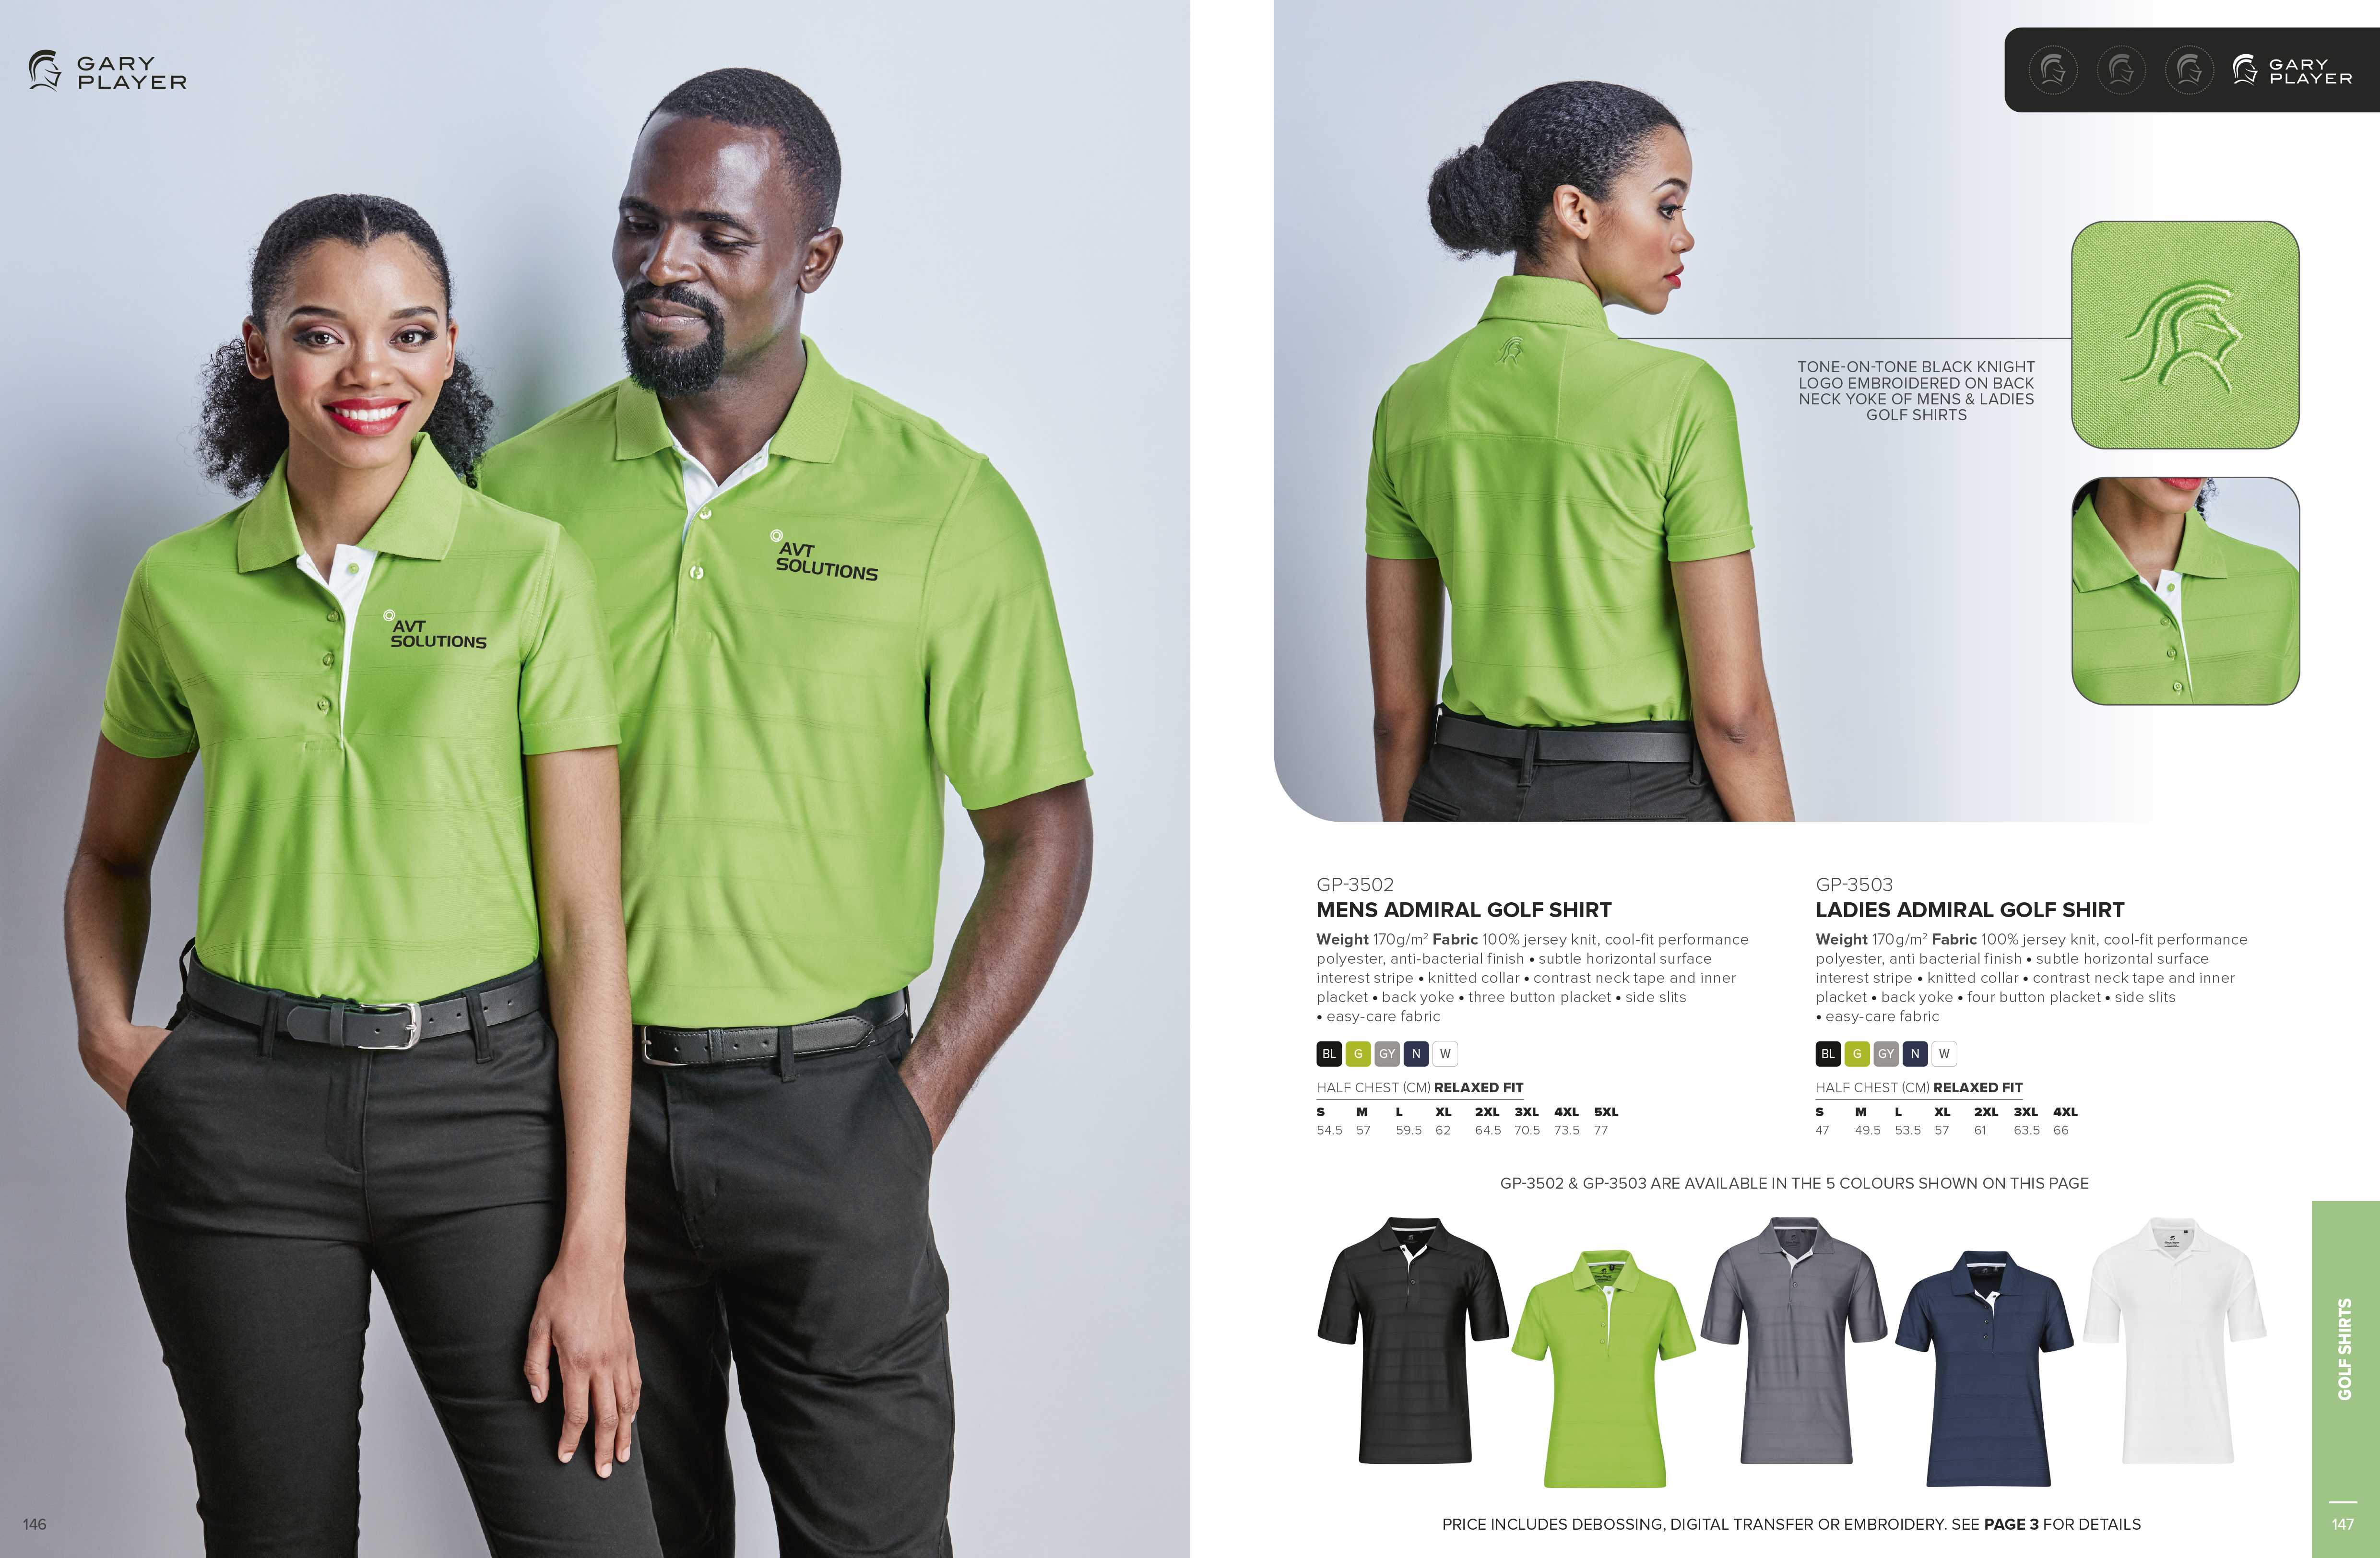 GP-3503 - Ladies Admiral Golf Shirt - Catalogue Image